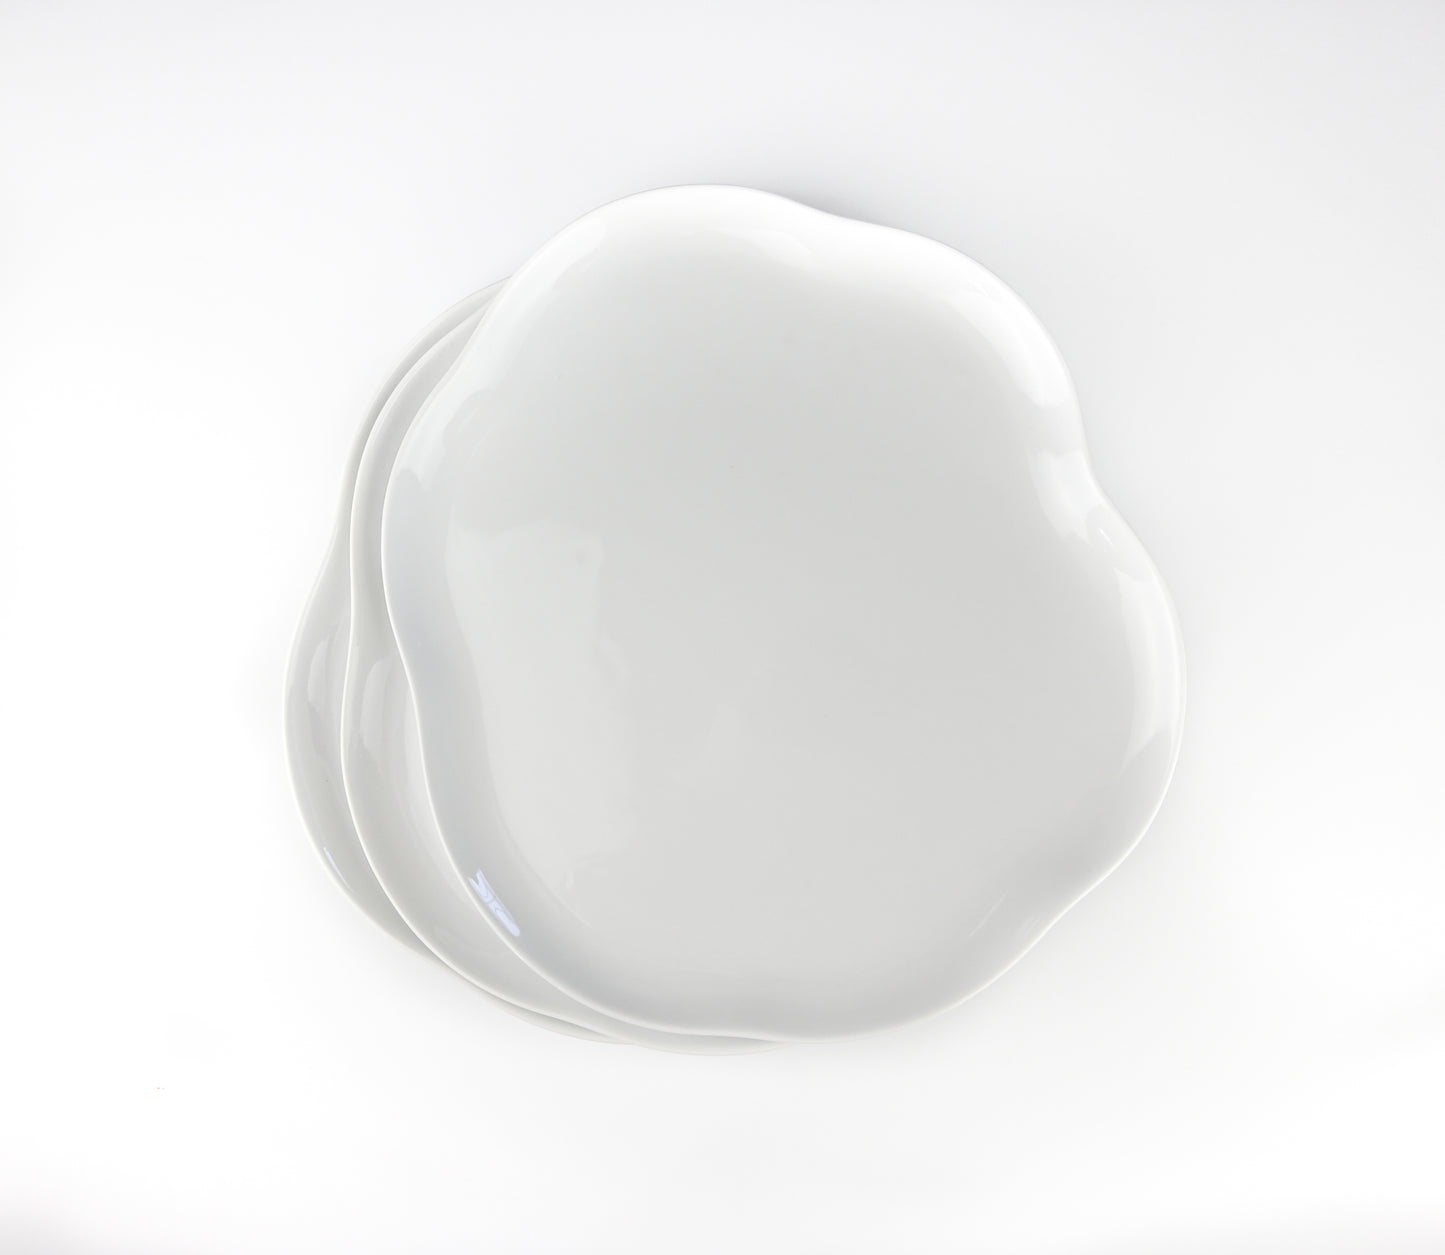 Organic Design Porcelain Platter - Set of 2 - Orion's Table 